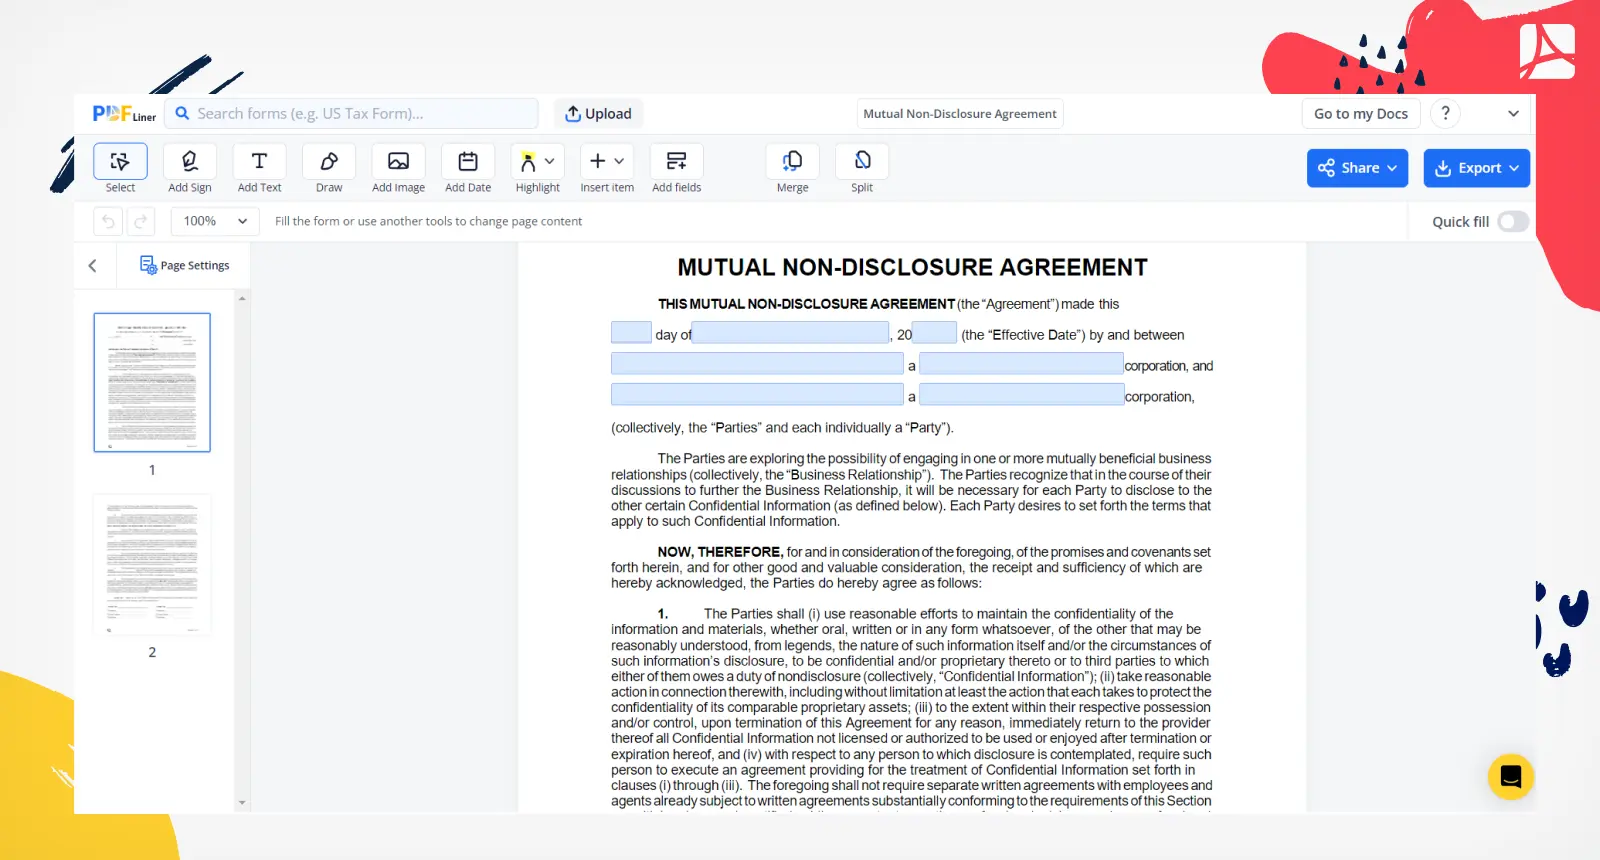 Mutual Non-Disclosure Agreement Screenshot